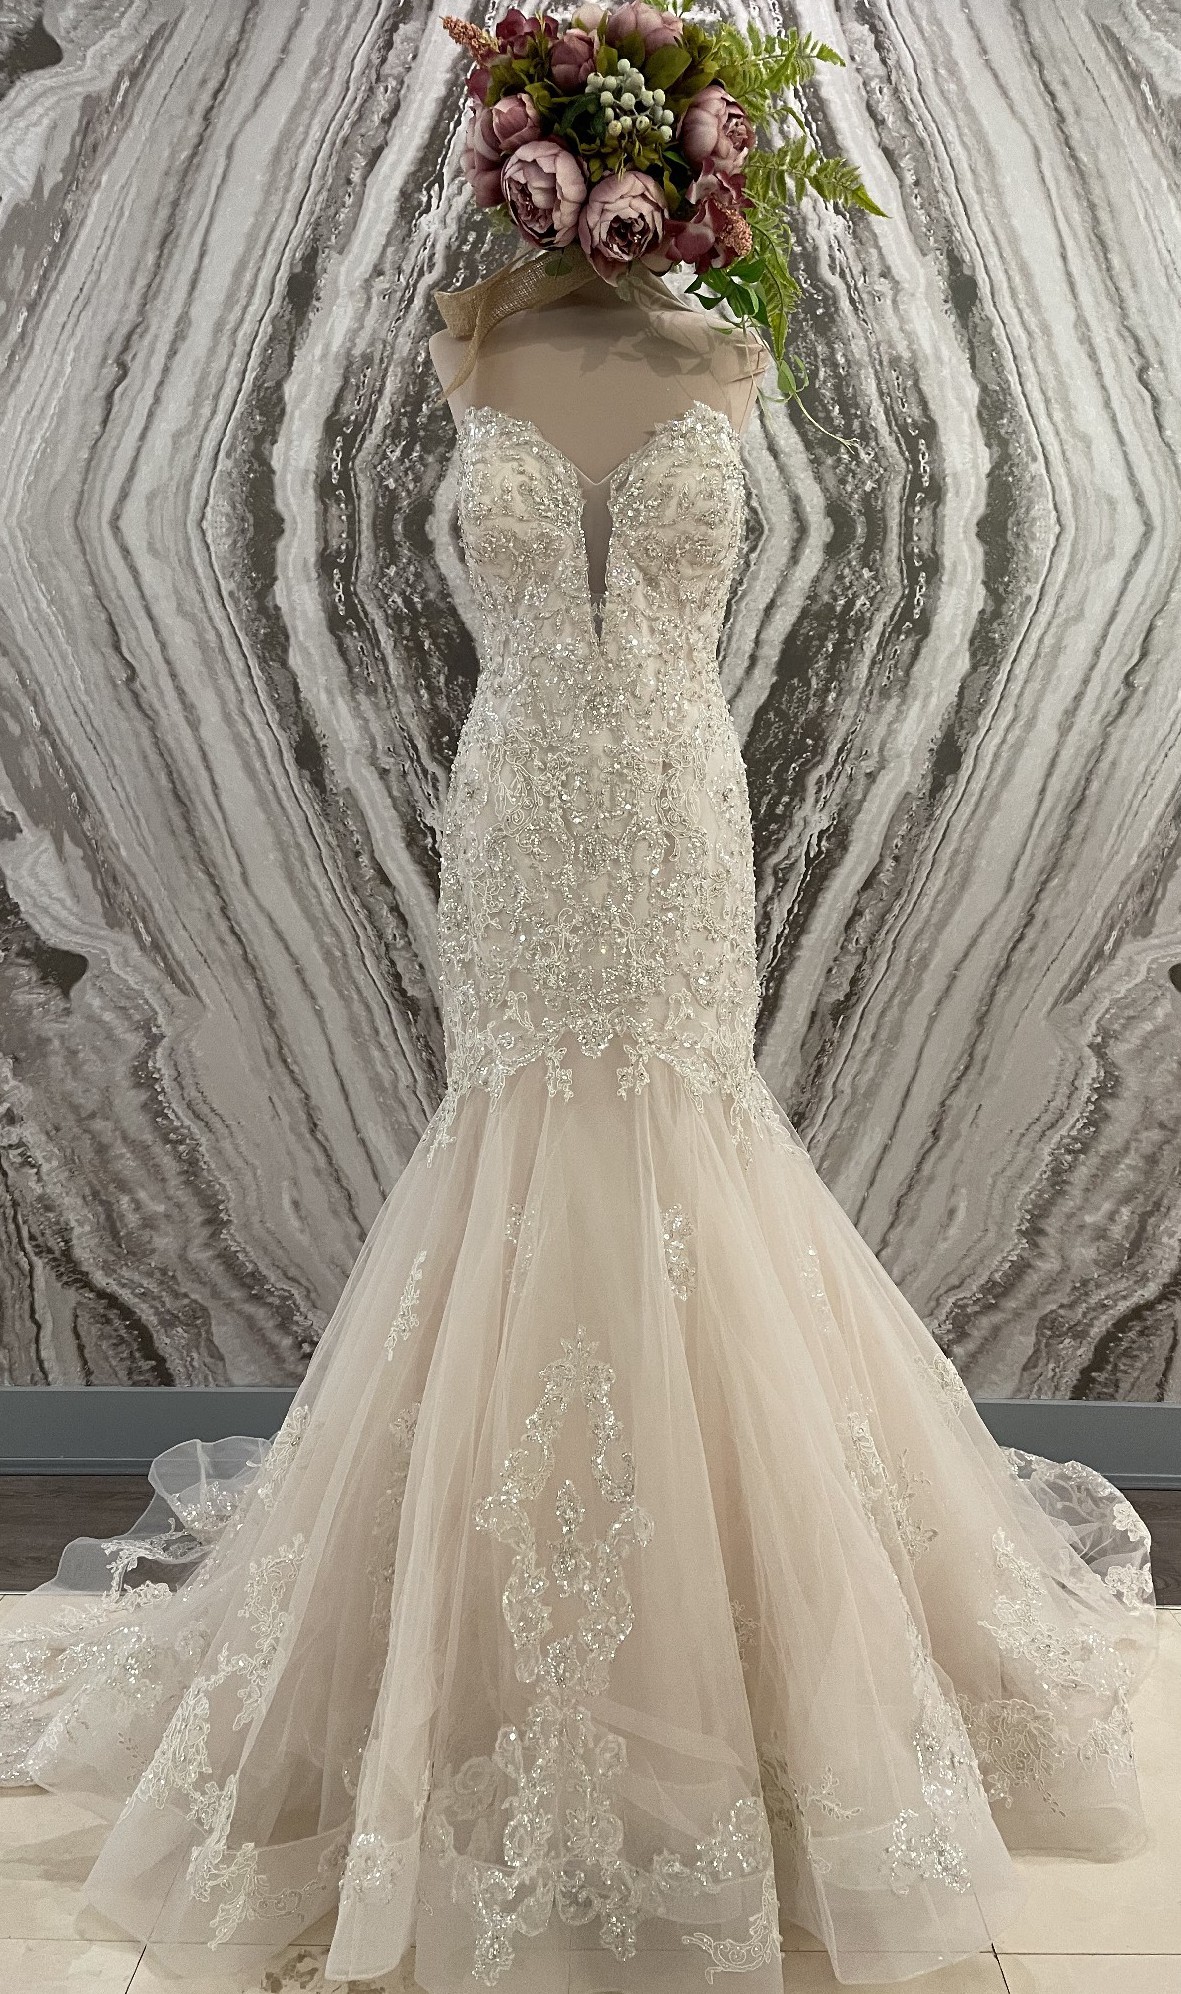 Allure Couture C560 Sample Wedding Dress Save 40% - Stillwhite